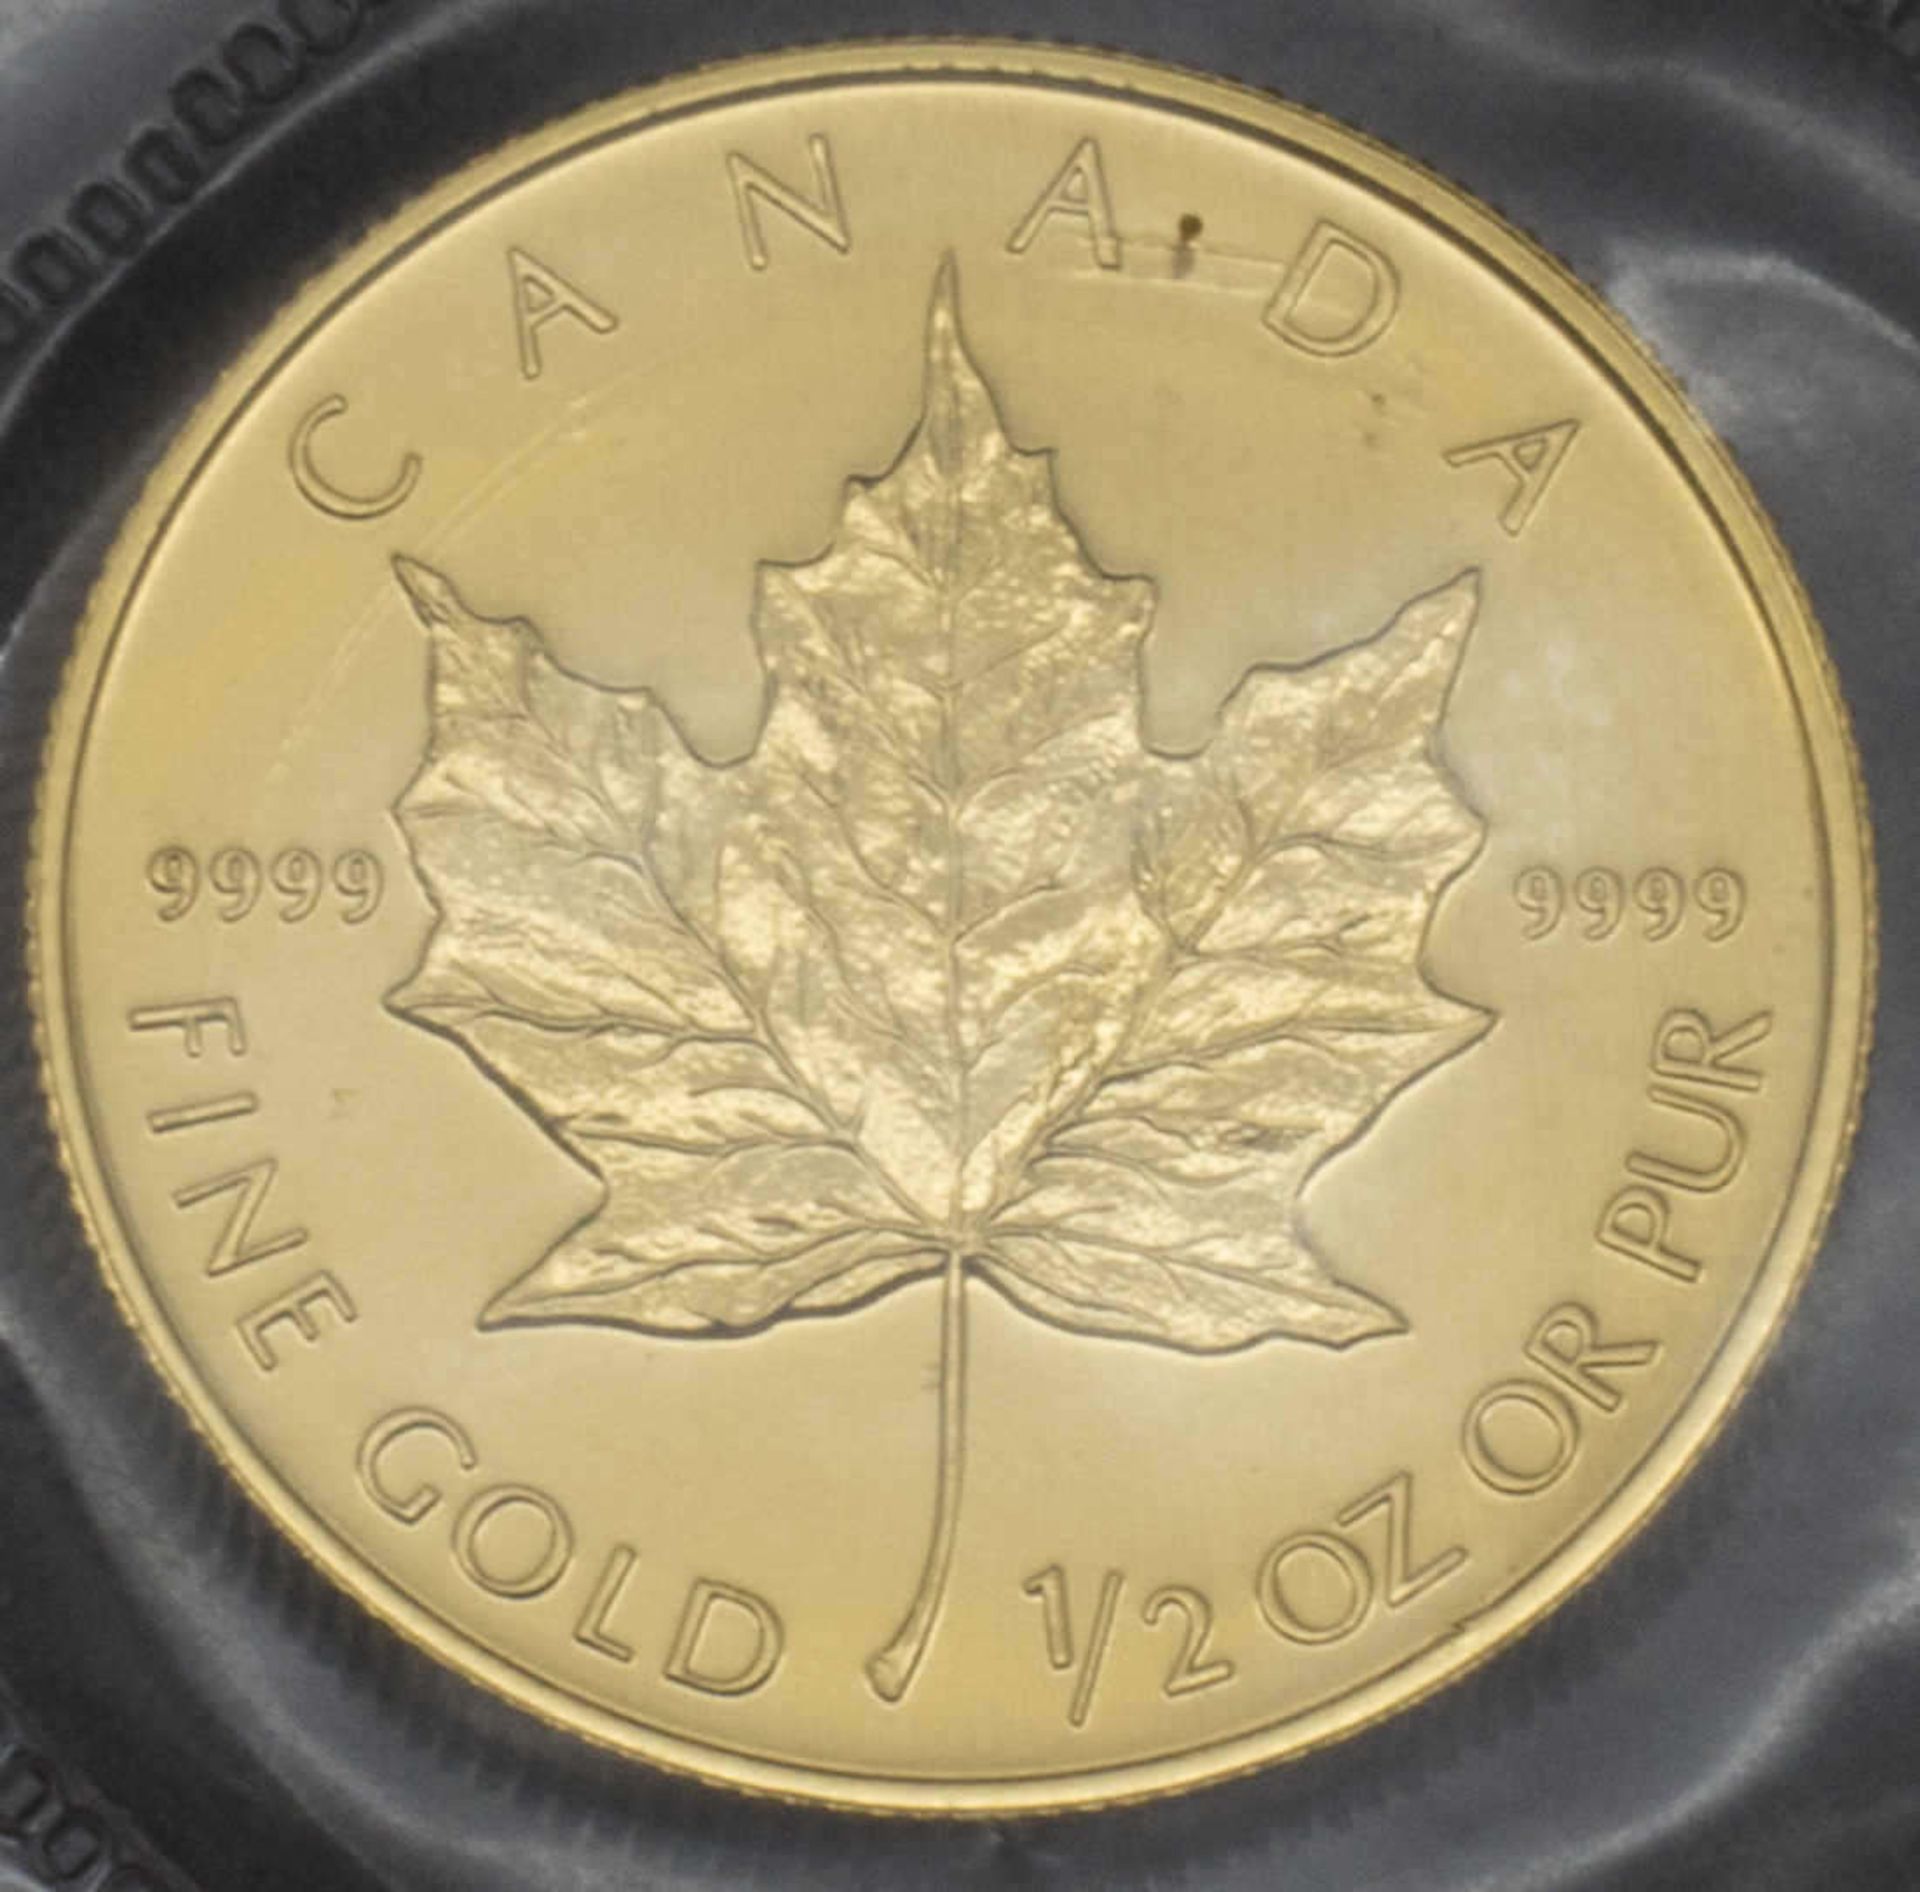 Kanada Goldmünze, 1/2 Unze 1990 "Maple Leaf 20 Dollar". UnzierkuliertCanada Gold Coin, 1/2 oz.